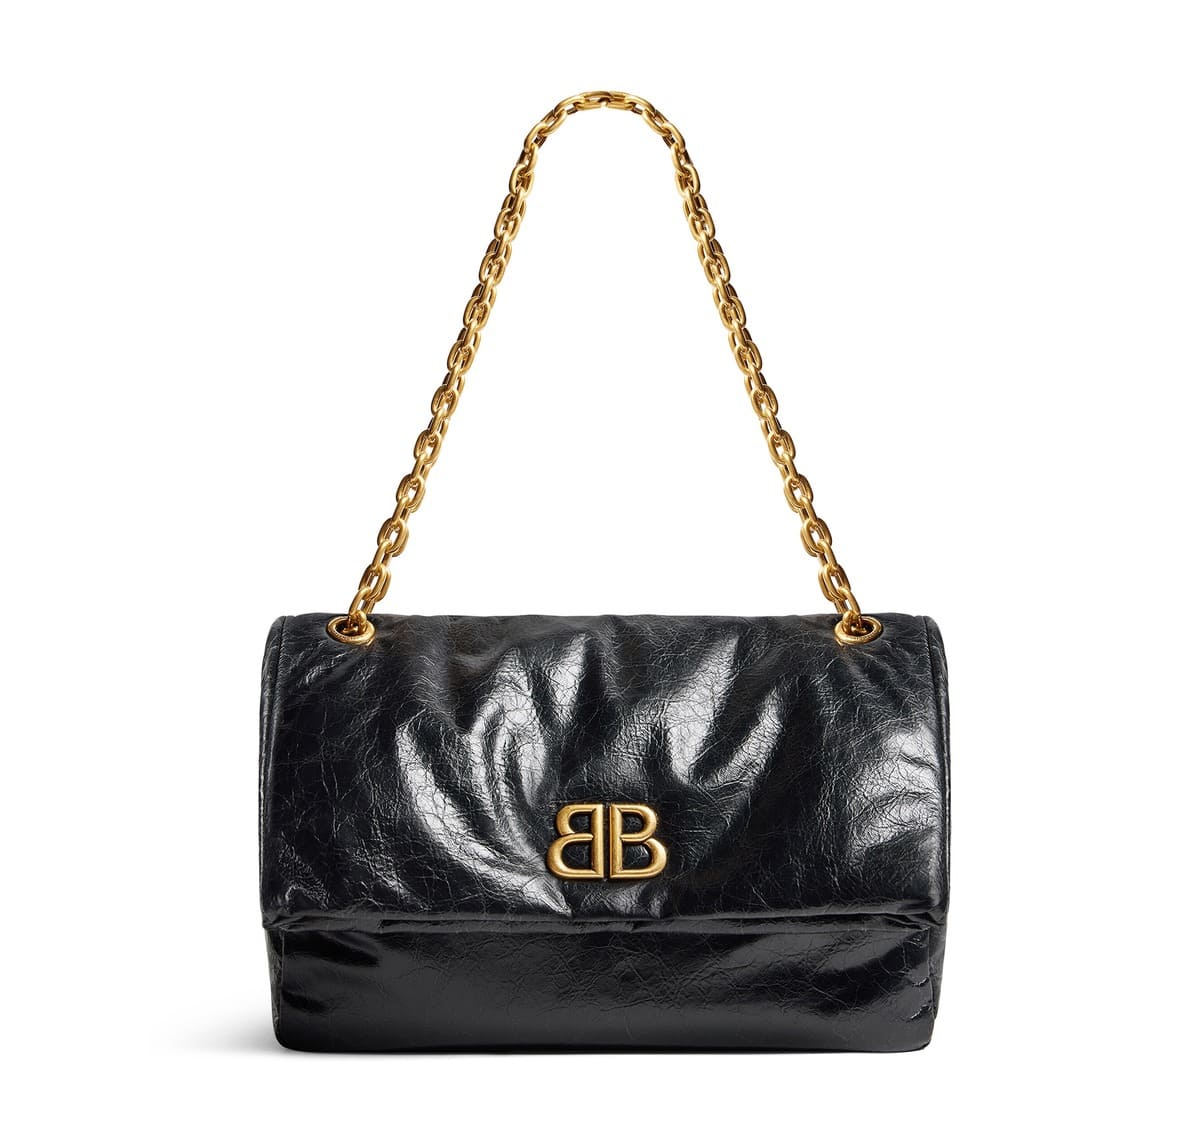 Balenciaga Monaco Medium Chain Bag in Arena Calfskin black